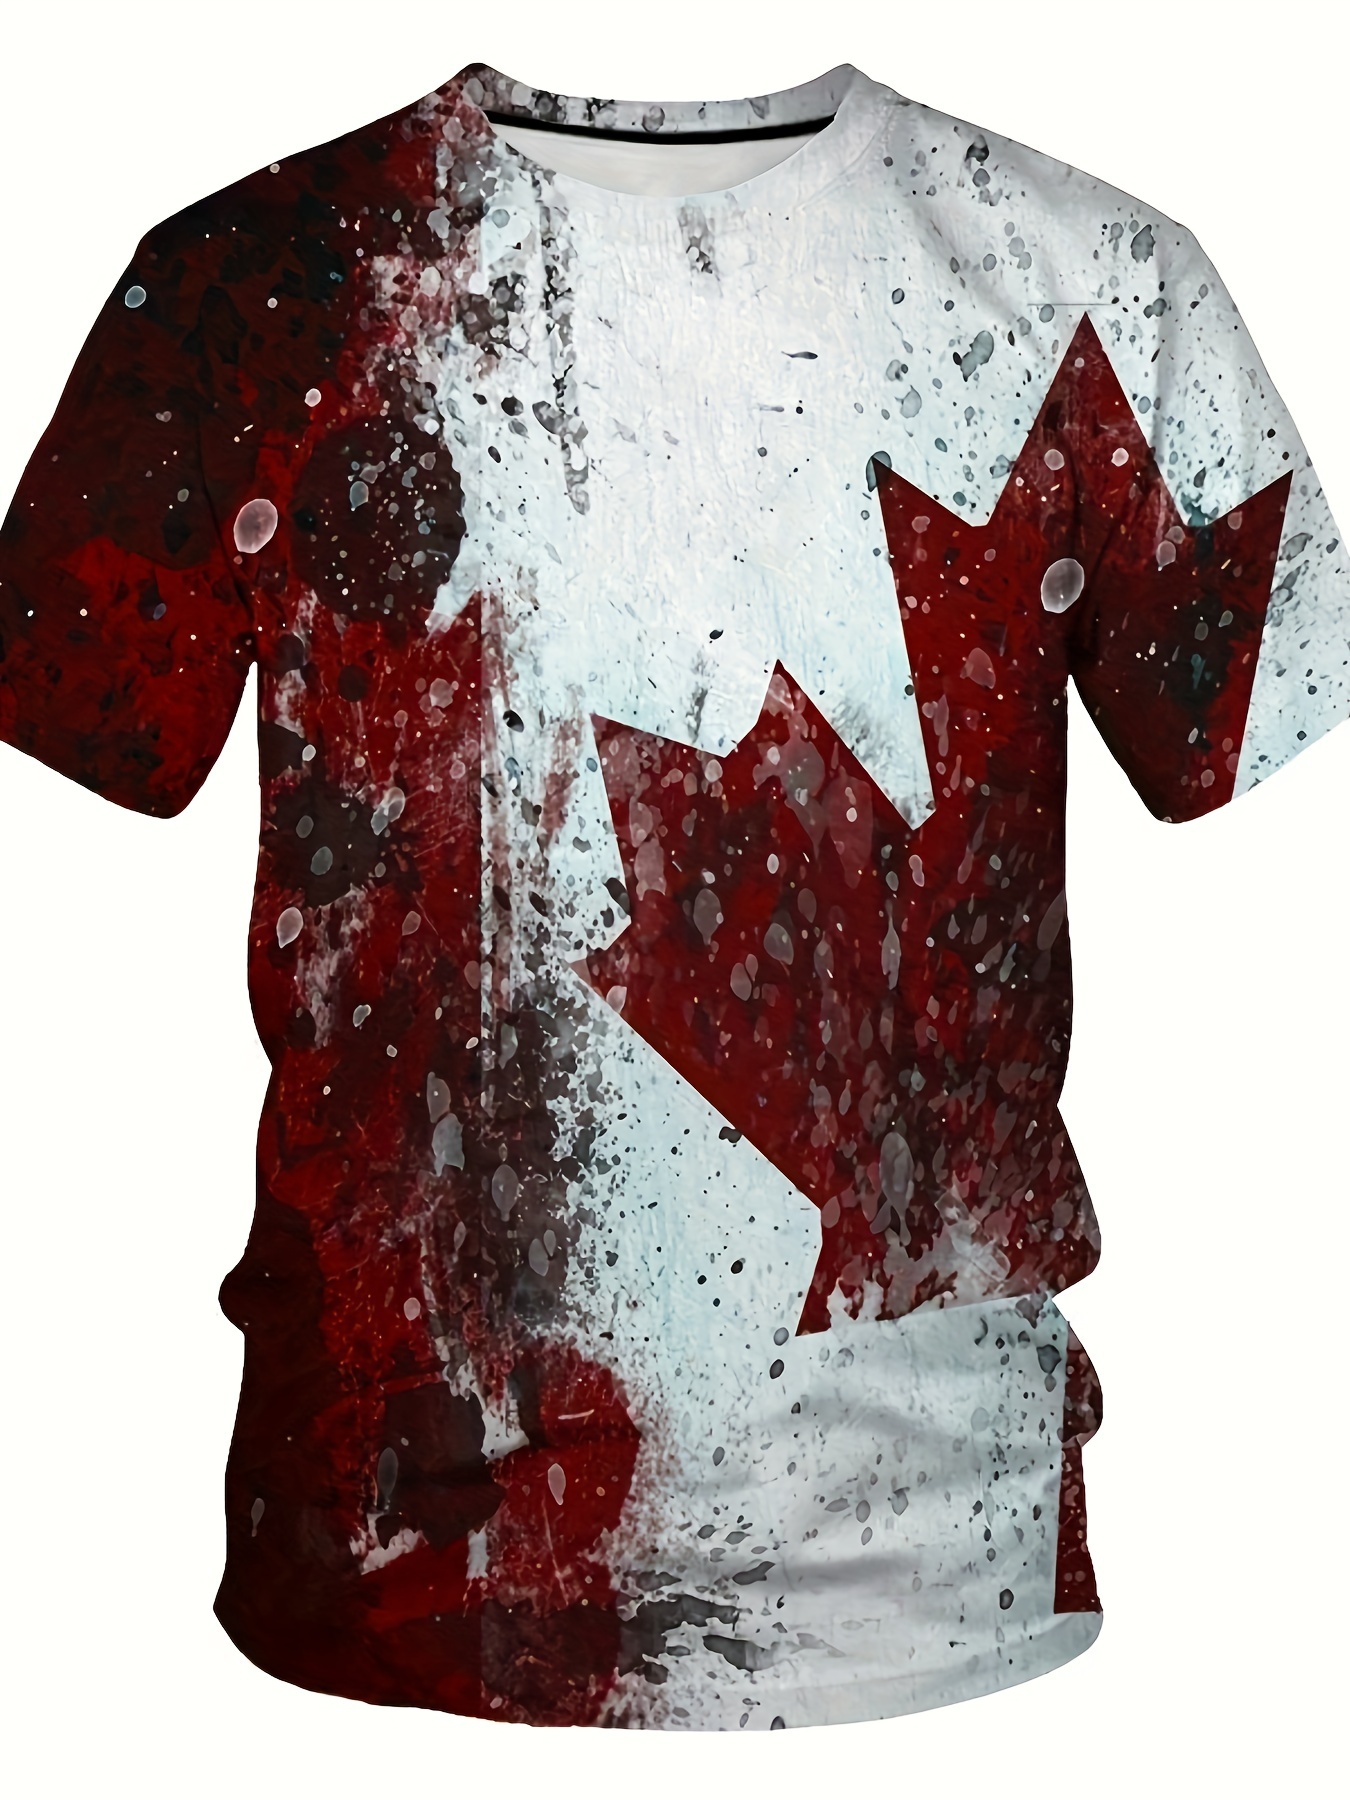 Daddy's Fishing Buddy Print Boys Creative T shirt Trendy - Temu Canada